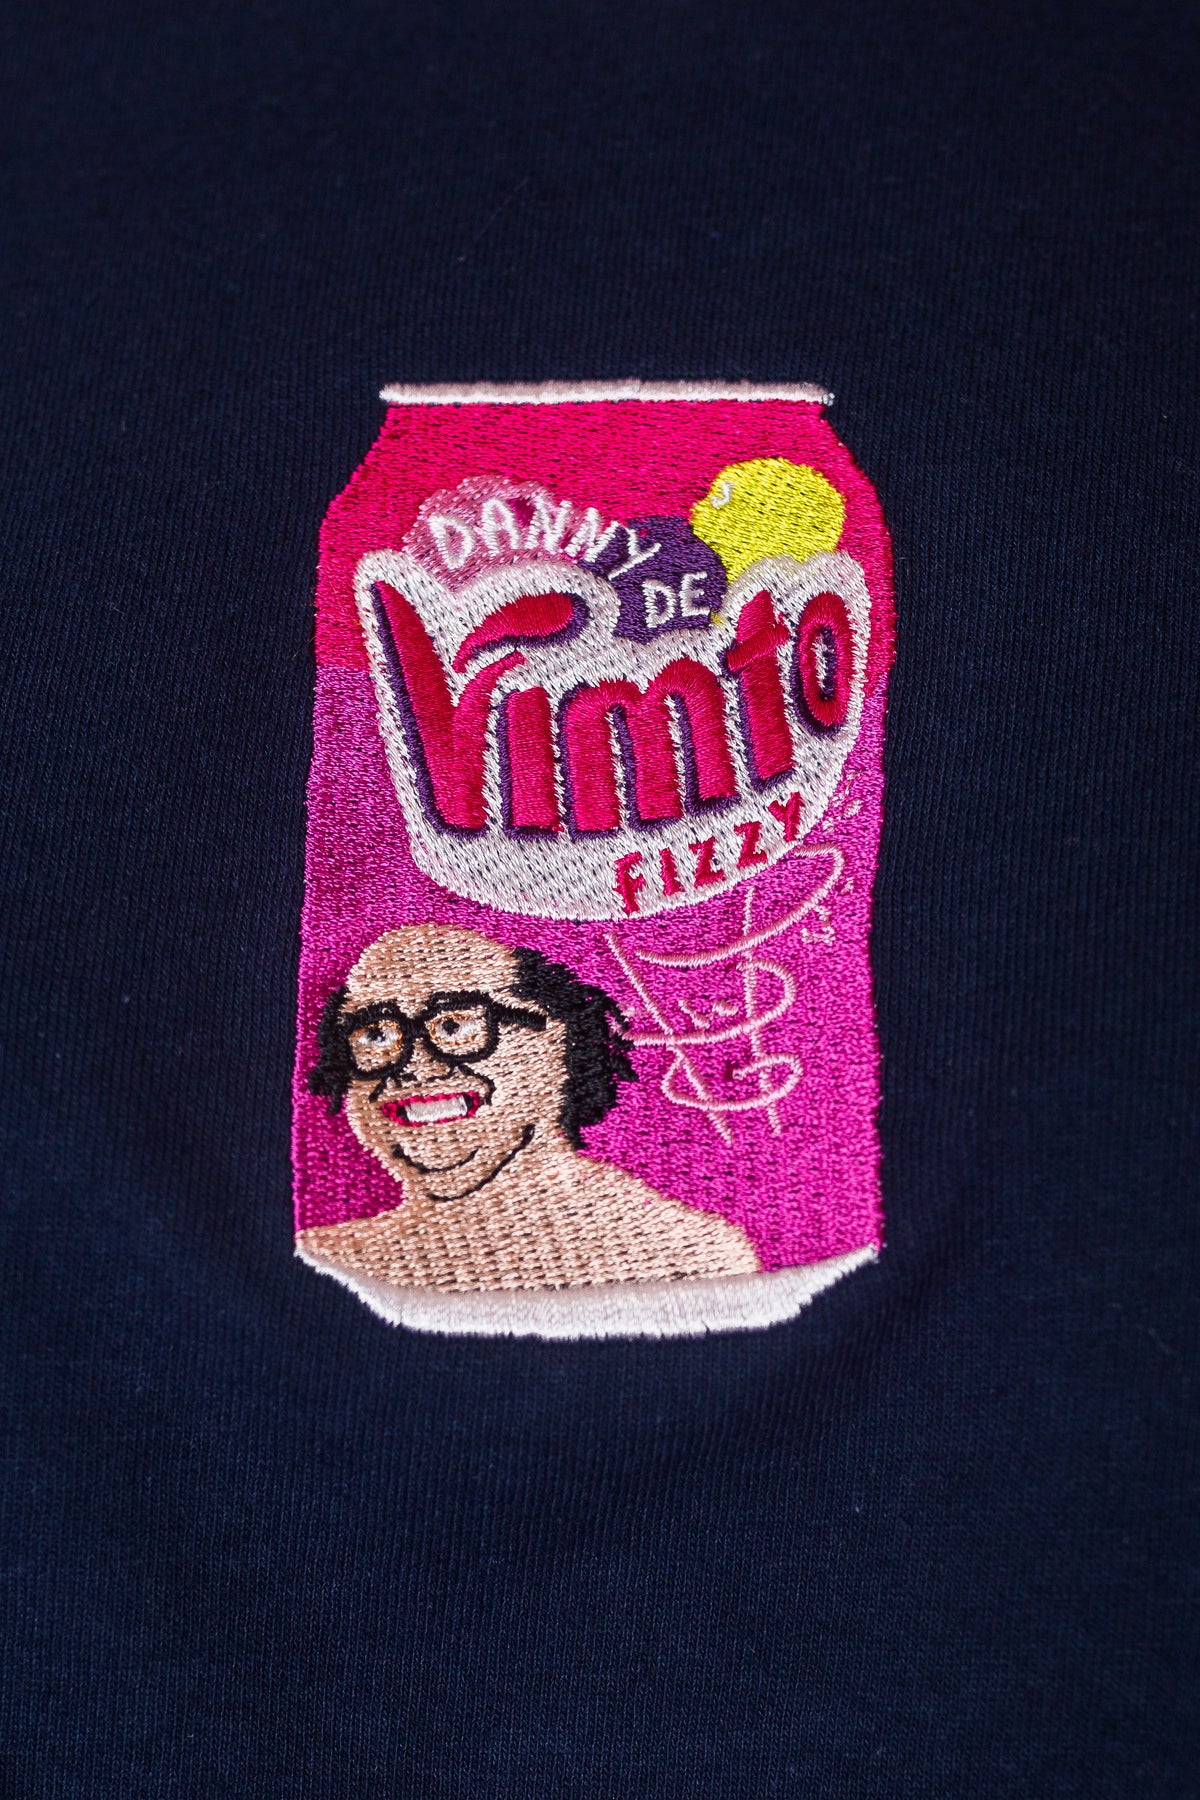 Danny DeVimto Embroidered T-Shirt